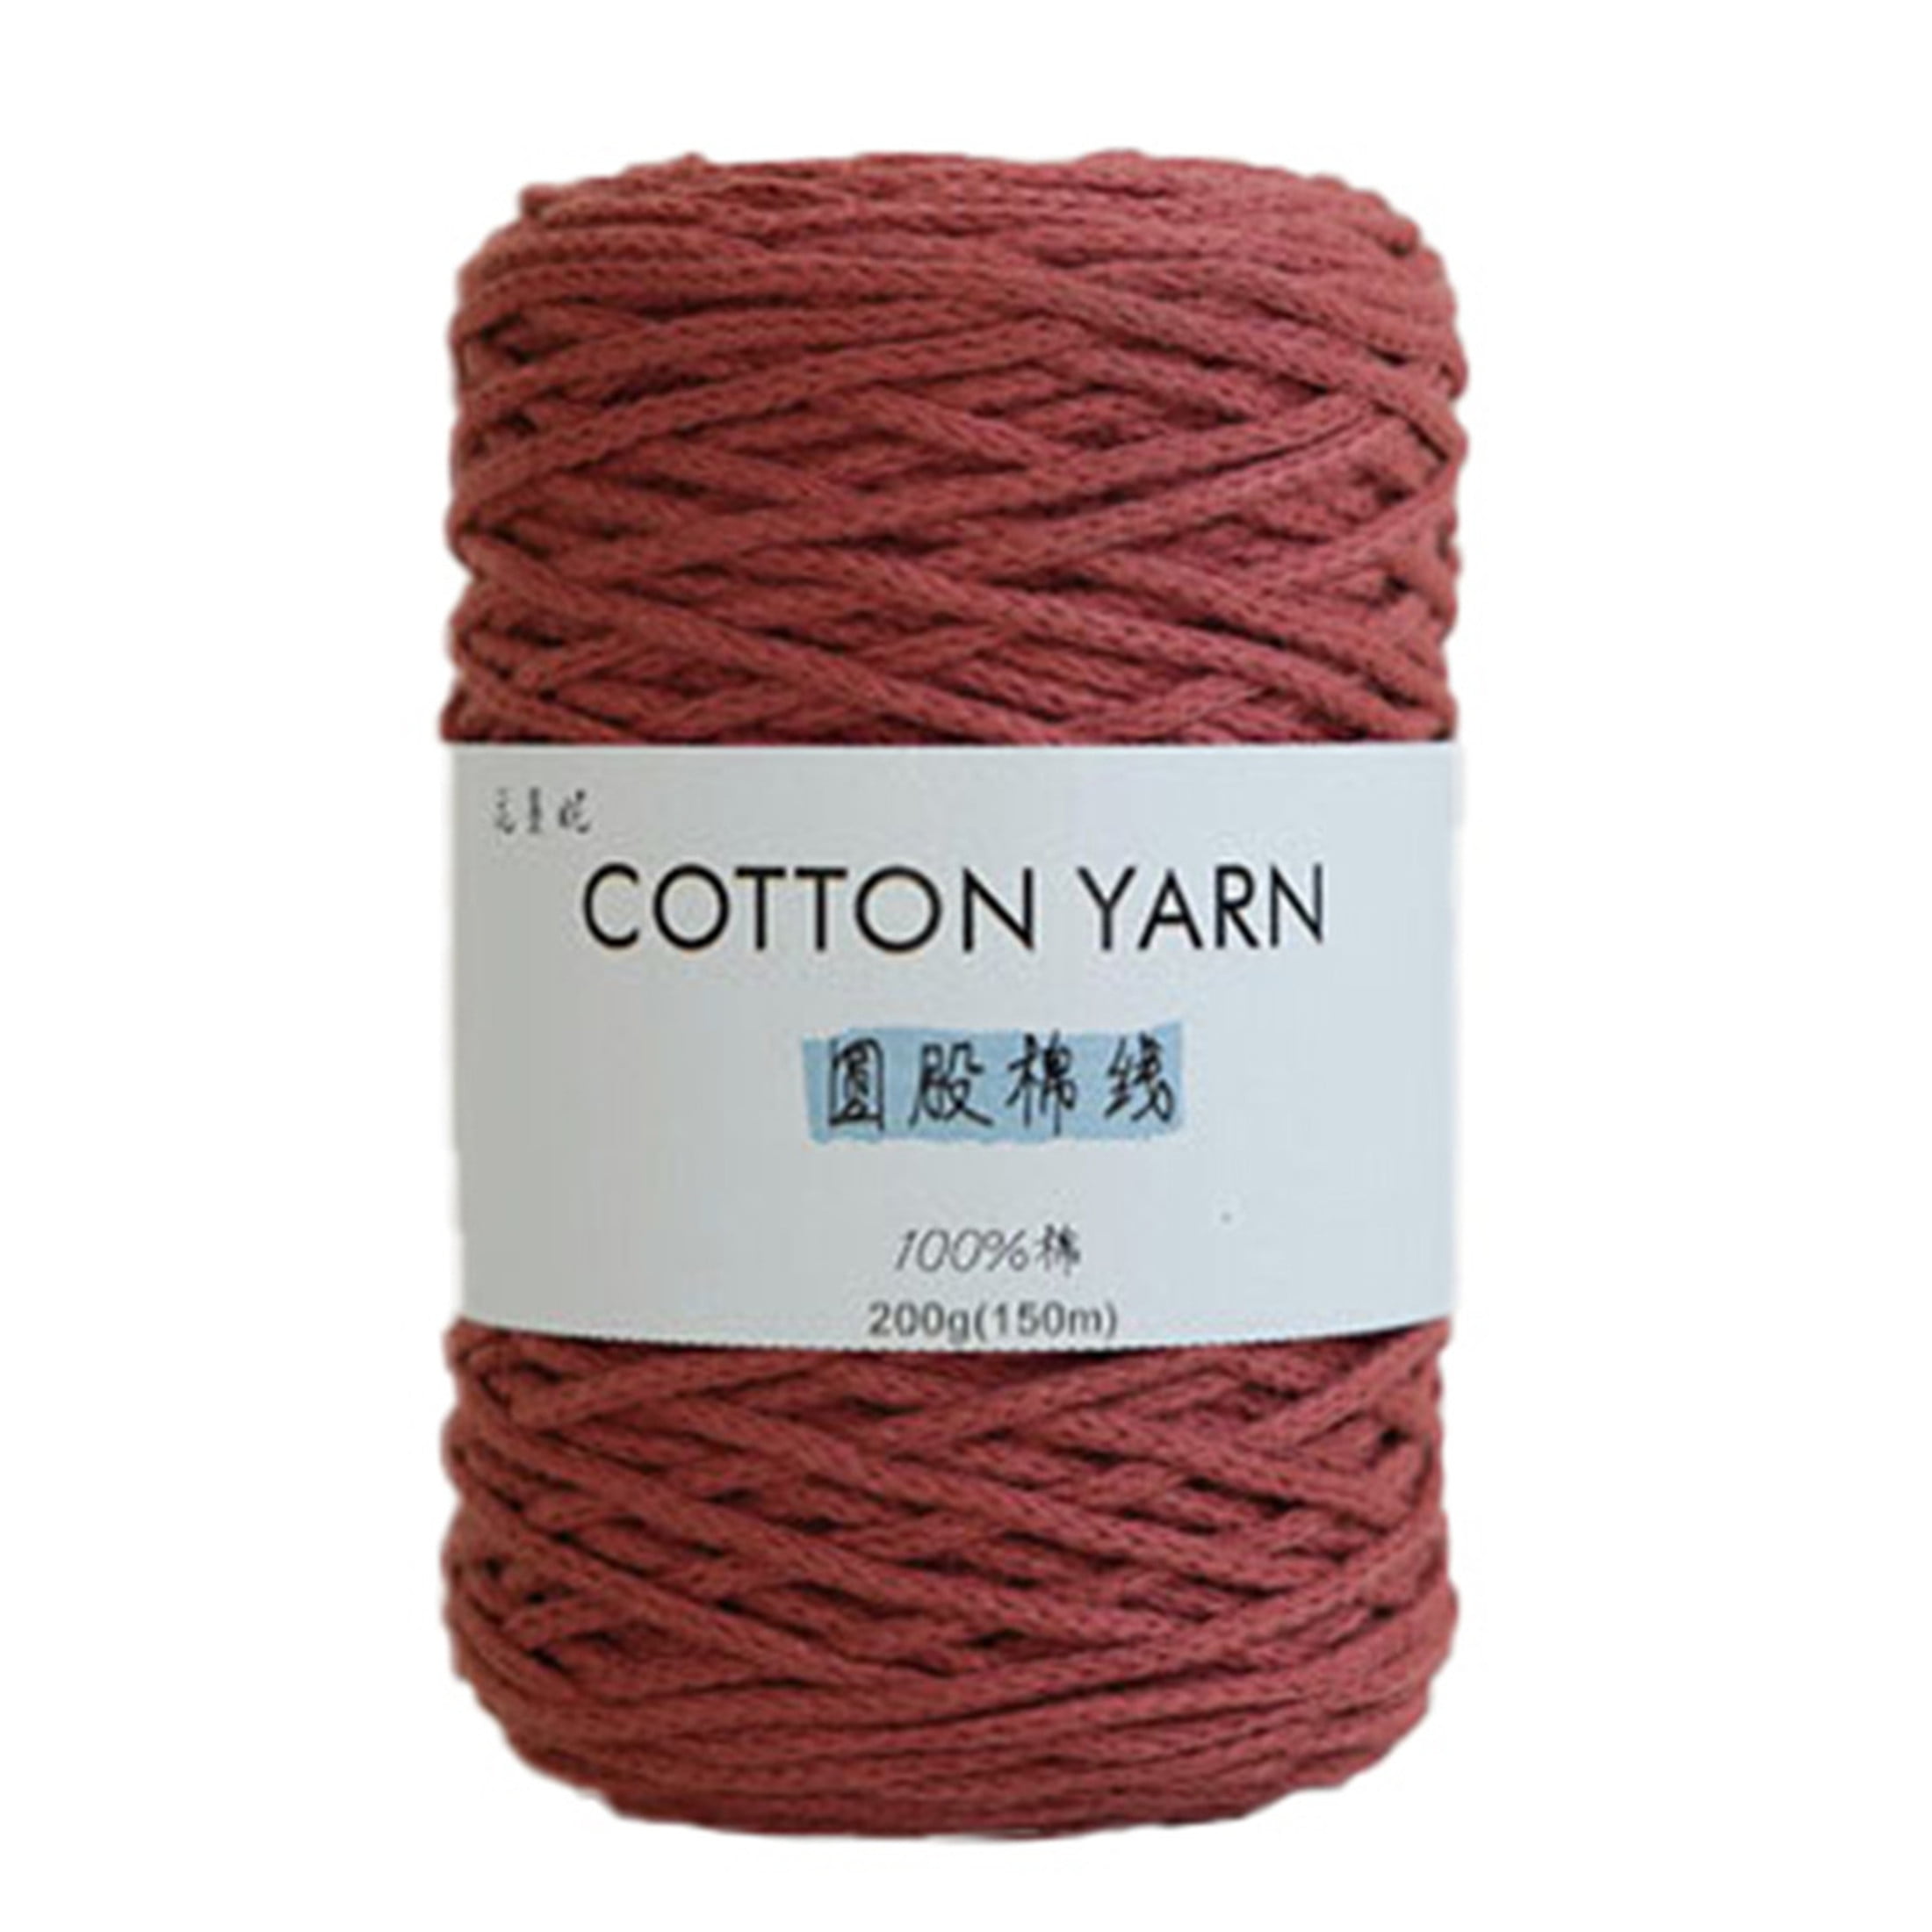 Pumpkin Orange Solid-20 grams Cotton Yarn Thread Crochet Embroidery Knitting DIY 